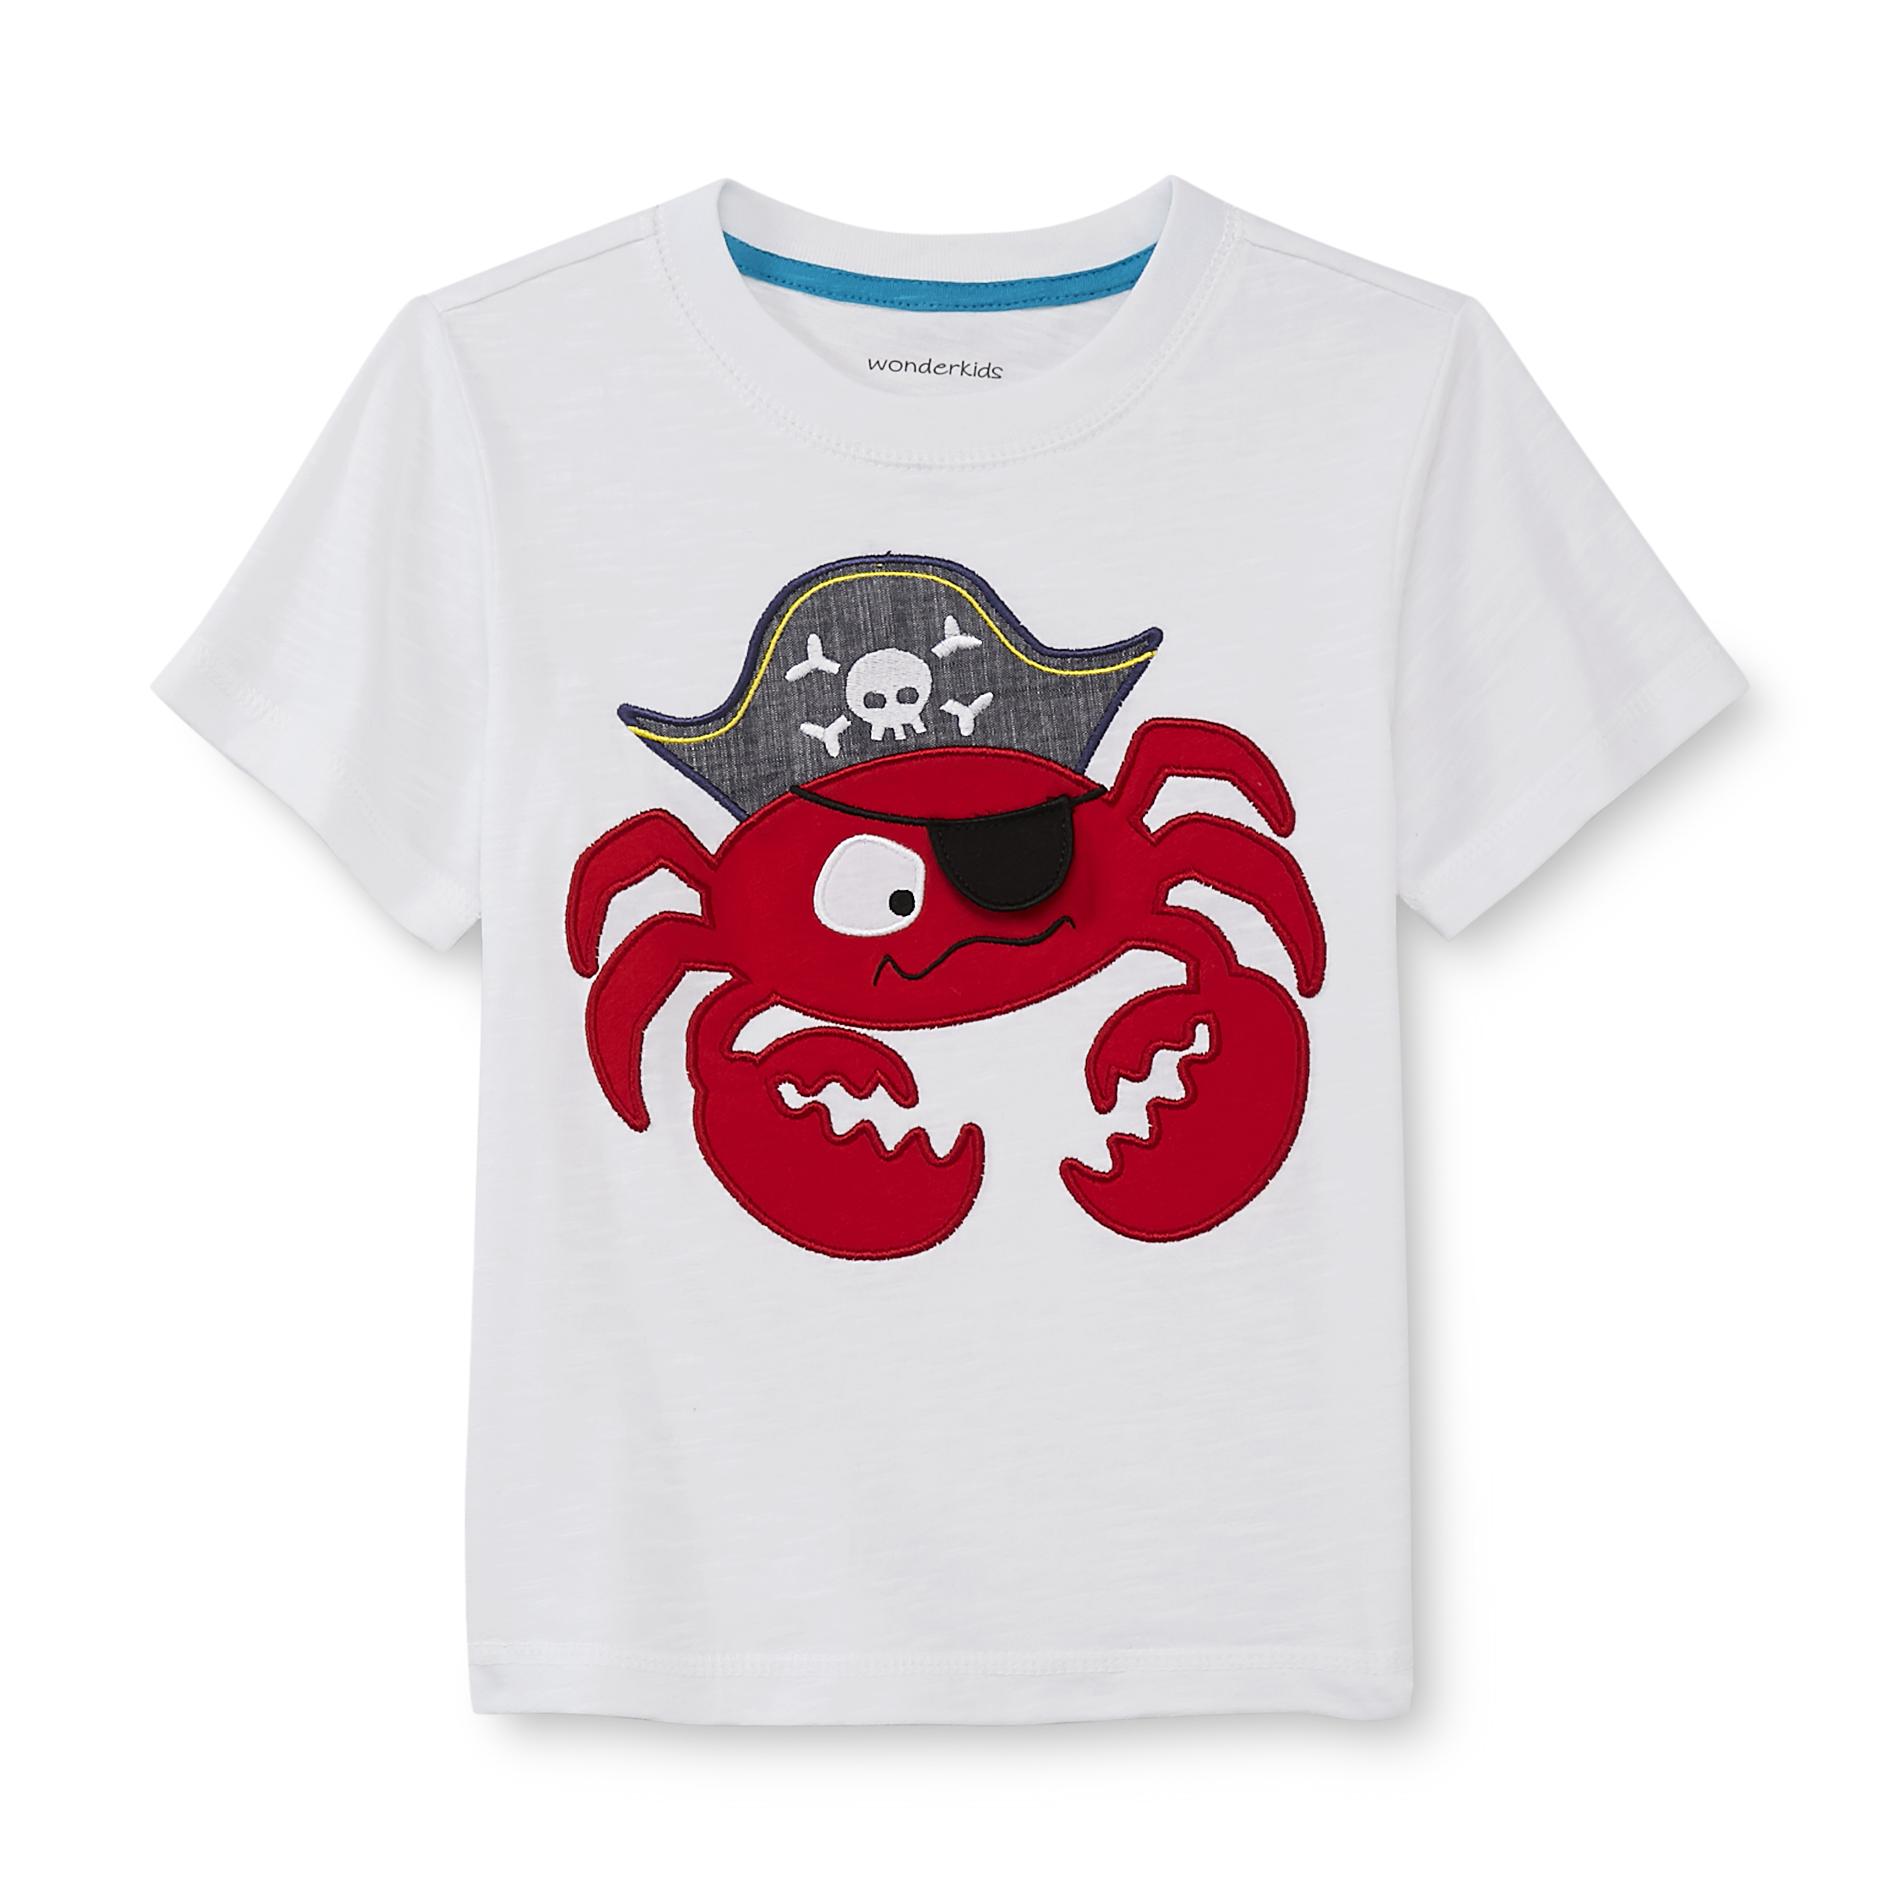 WonderKids Infant & Toddler Boy's Graphic T-Shirt - Pirate Crab